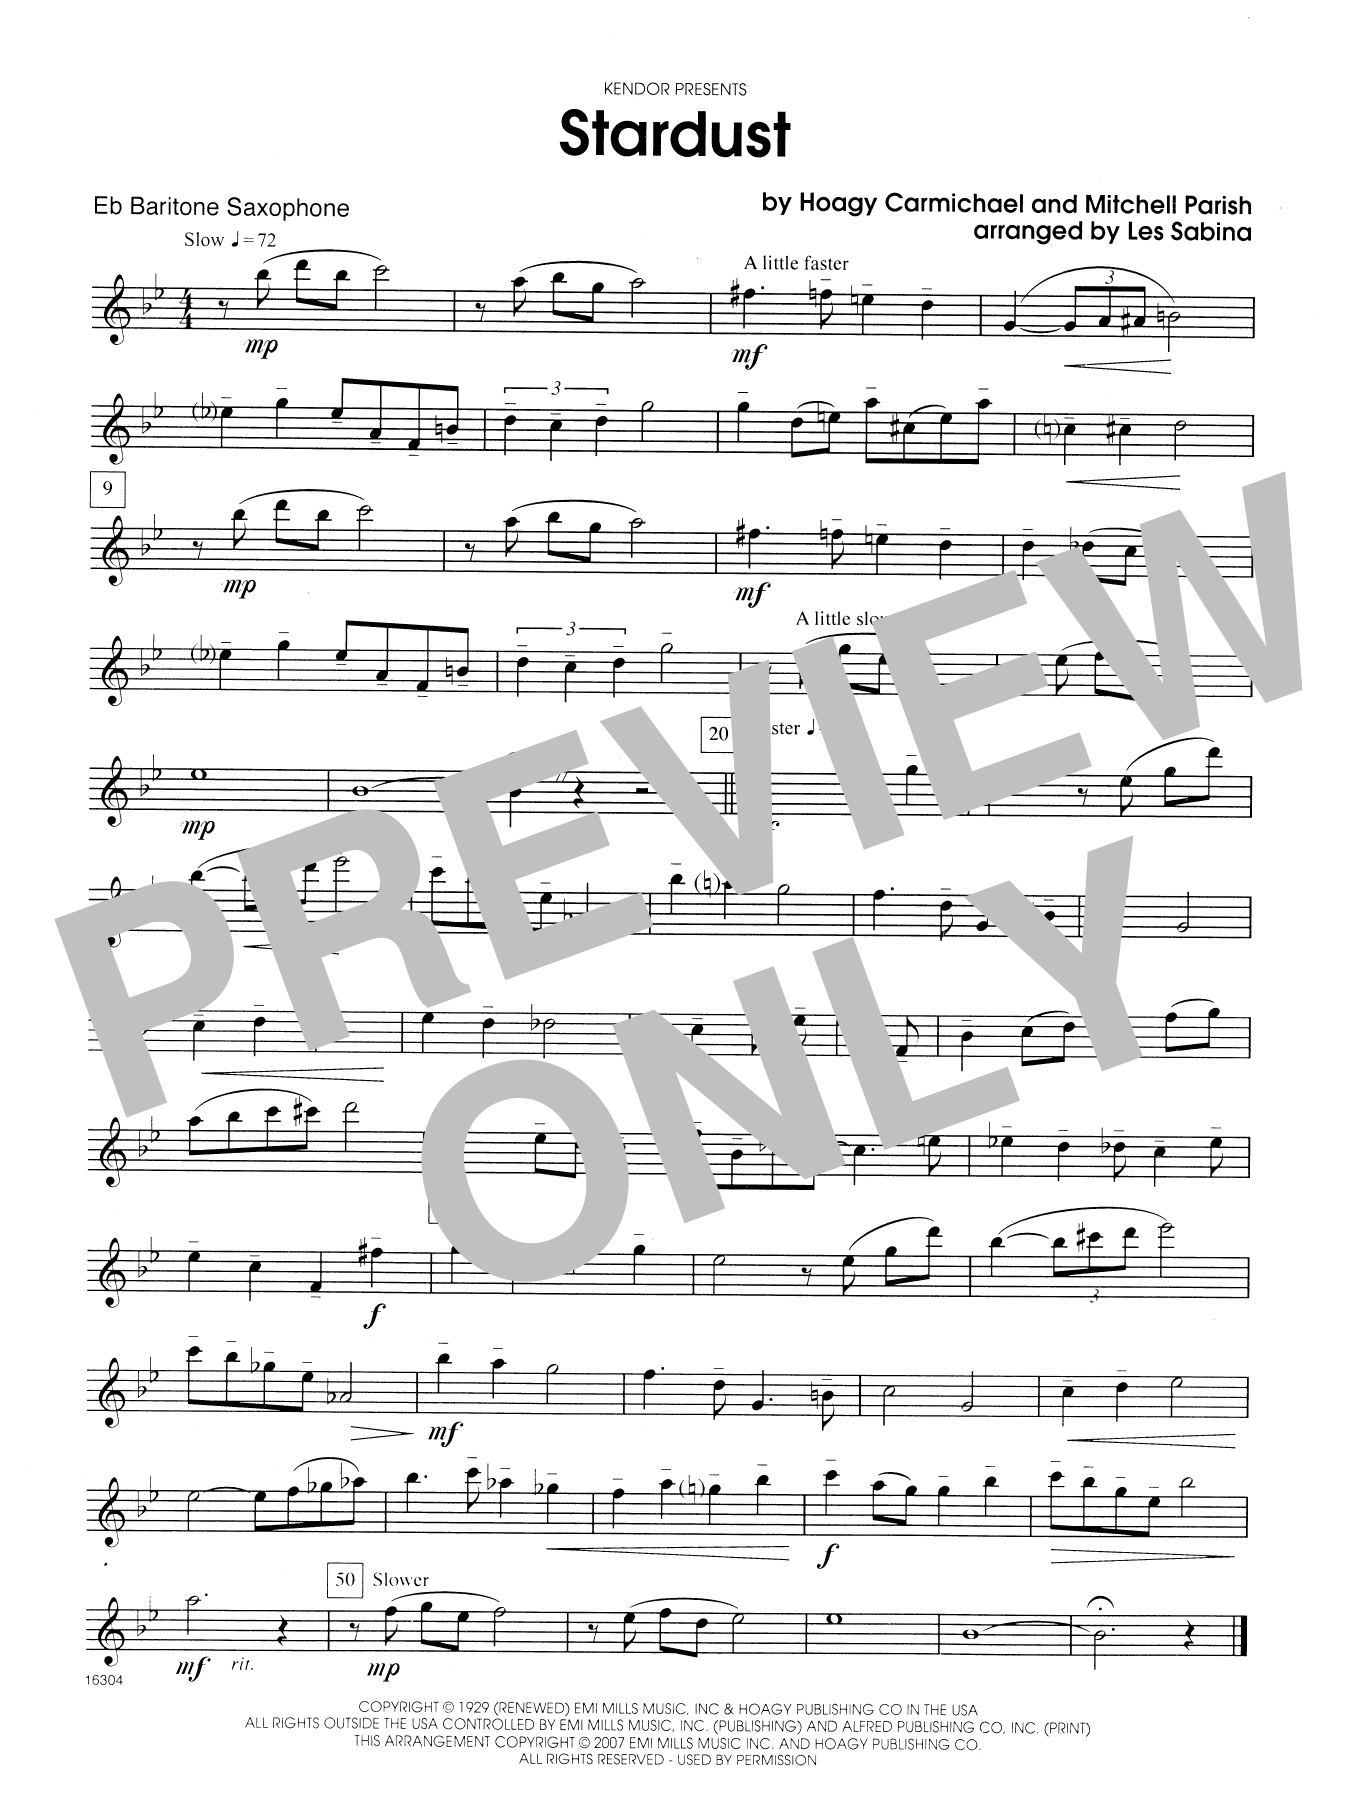 Les Sabina Stardust - Eb Baritone Saxophone sheet music notes and chords. Download Printable PDF.